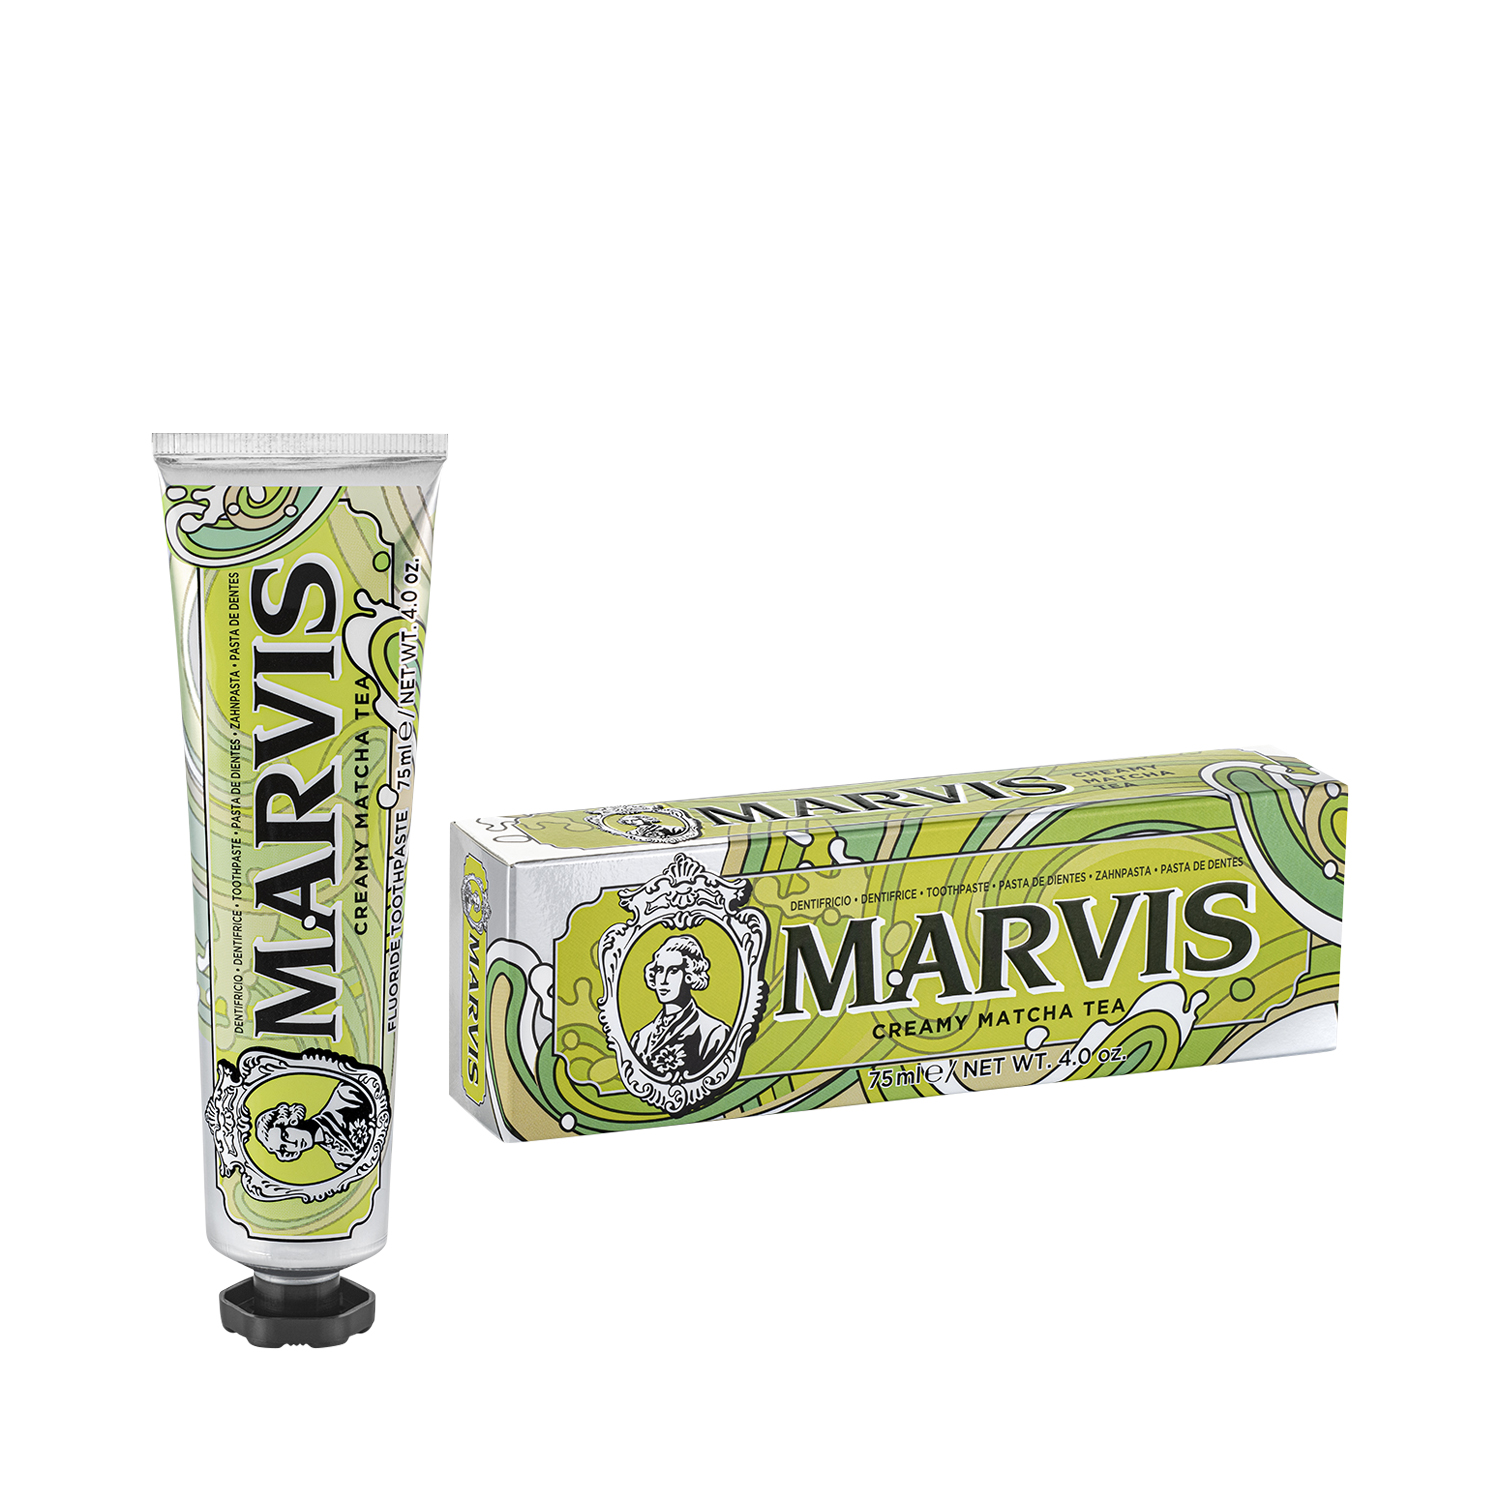 Marvis - Tea Collection - Creamy Matcha Tea - Zahncreme